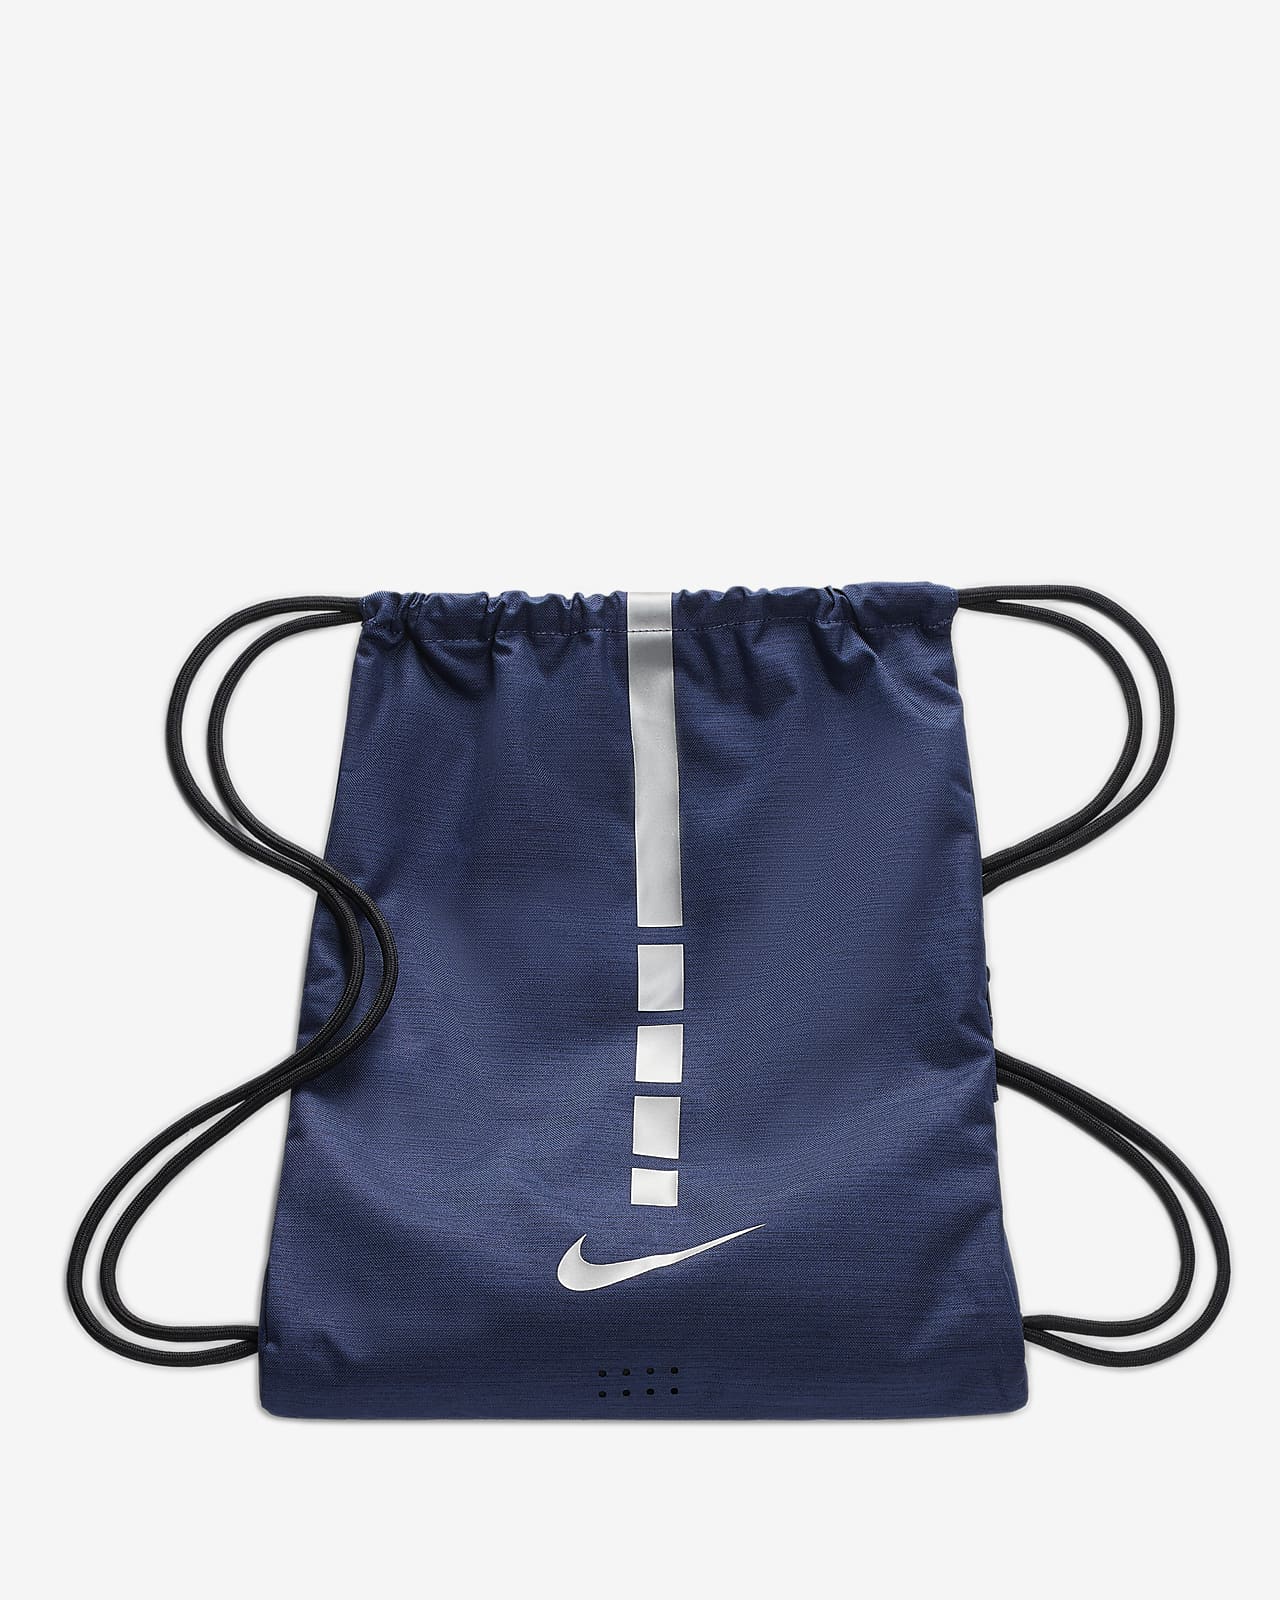 nike gym sack with pockets